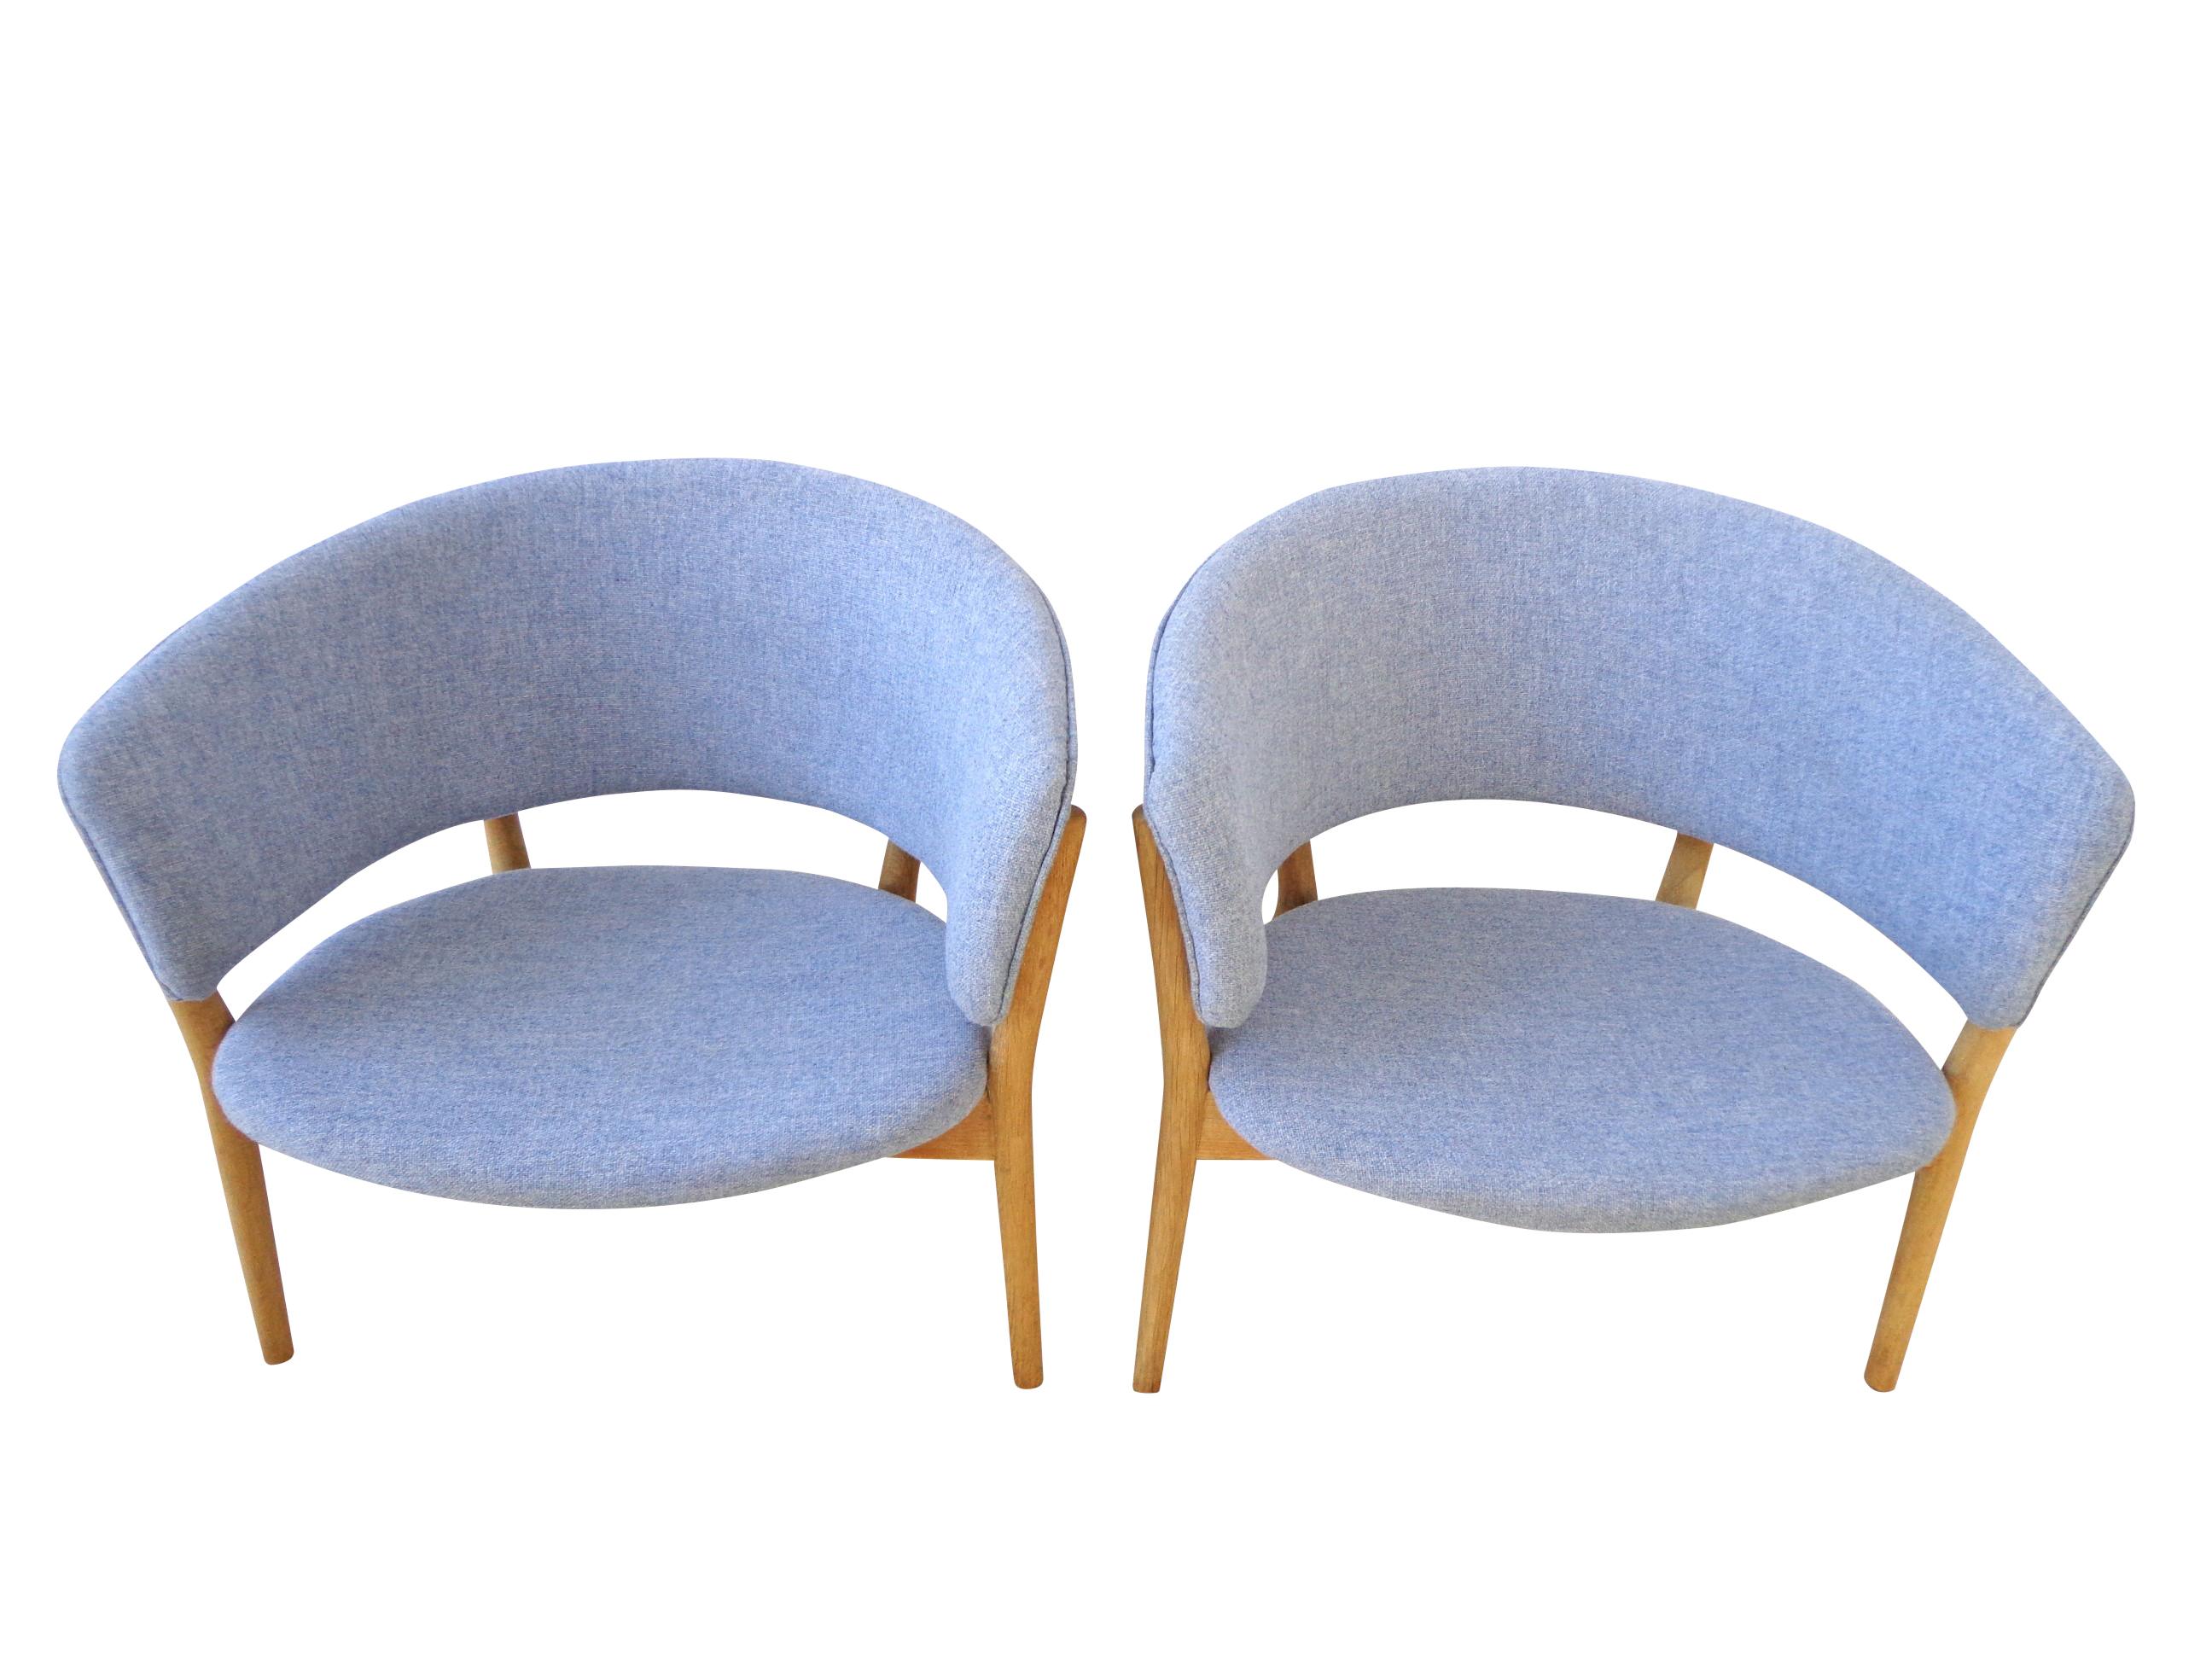 Nanna Ditzel Pair of Lounge Chairs in Wool by Soren Willadsen, Denmark, 1950s For Sale 1